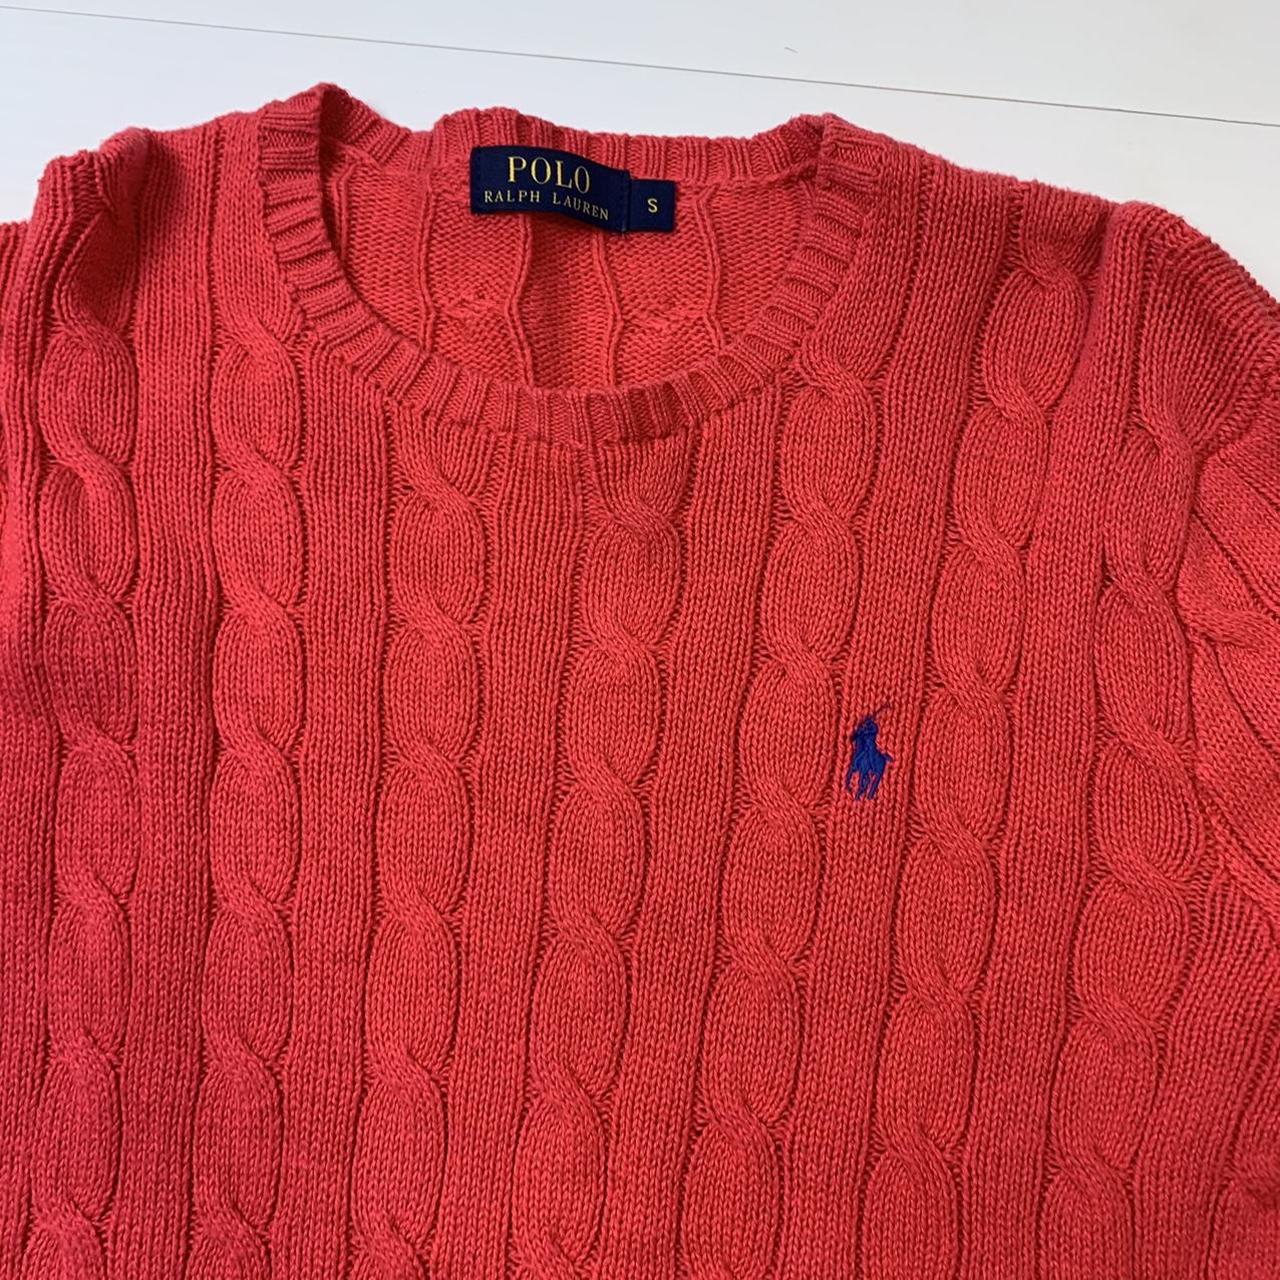 Ralph Lauren knitted jumper in pink 📌 Our... - Depop